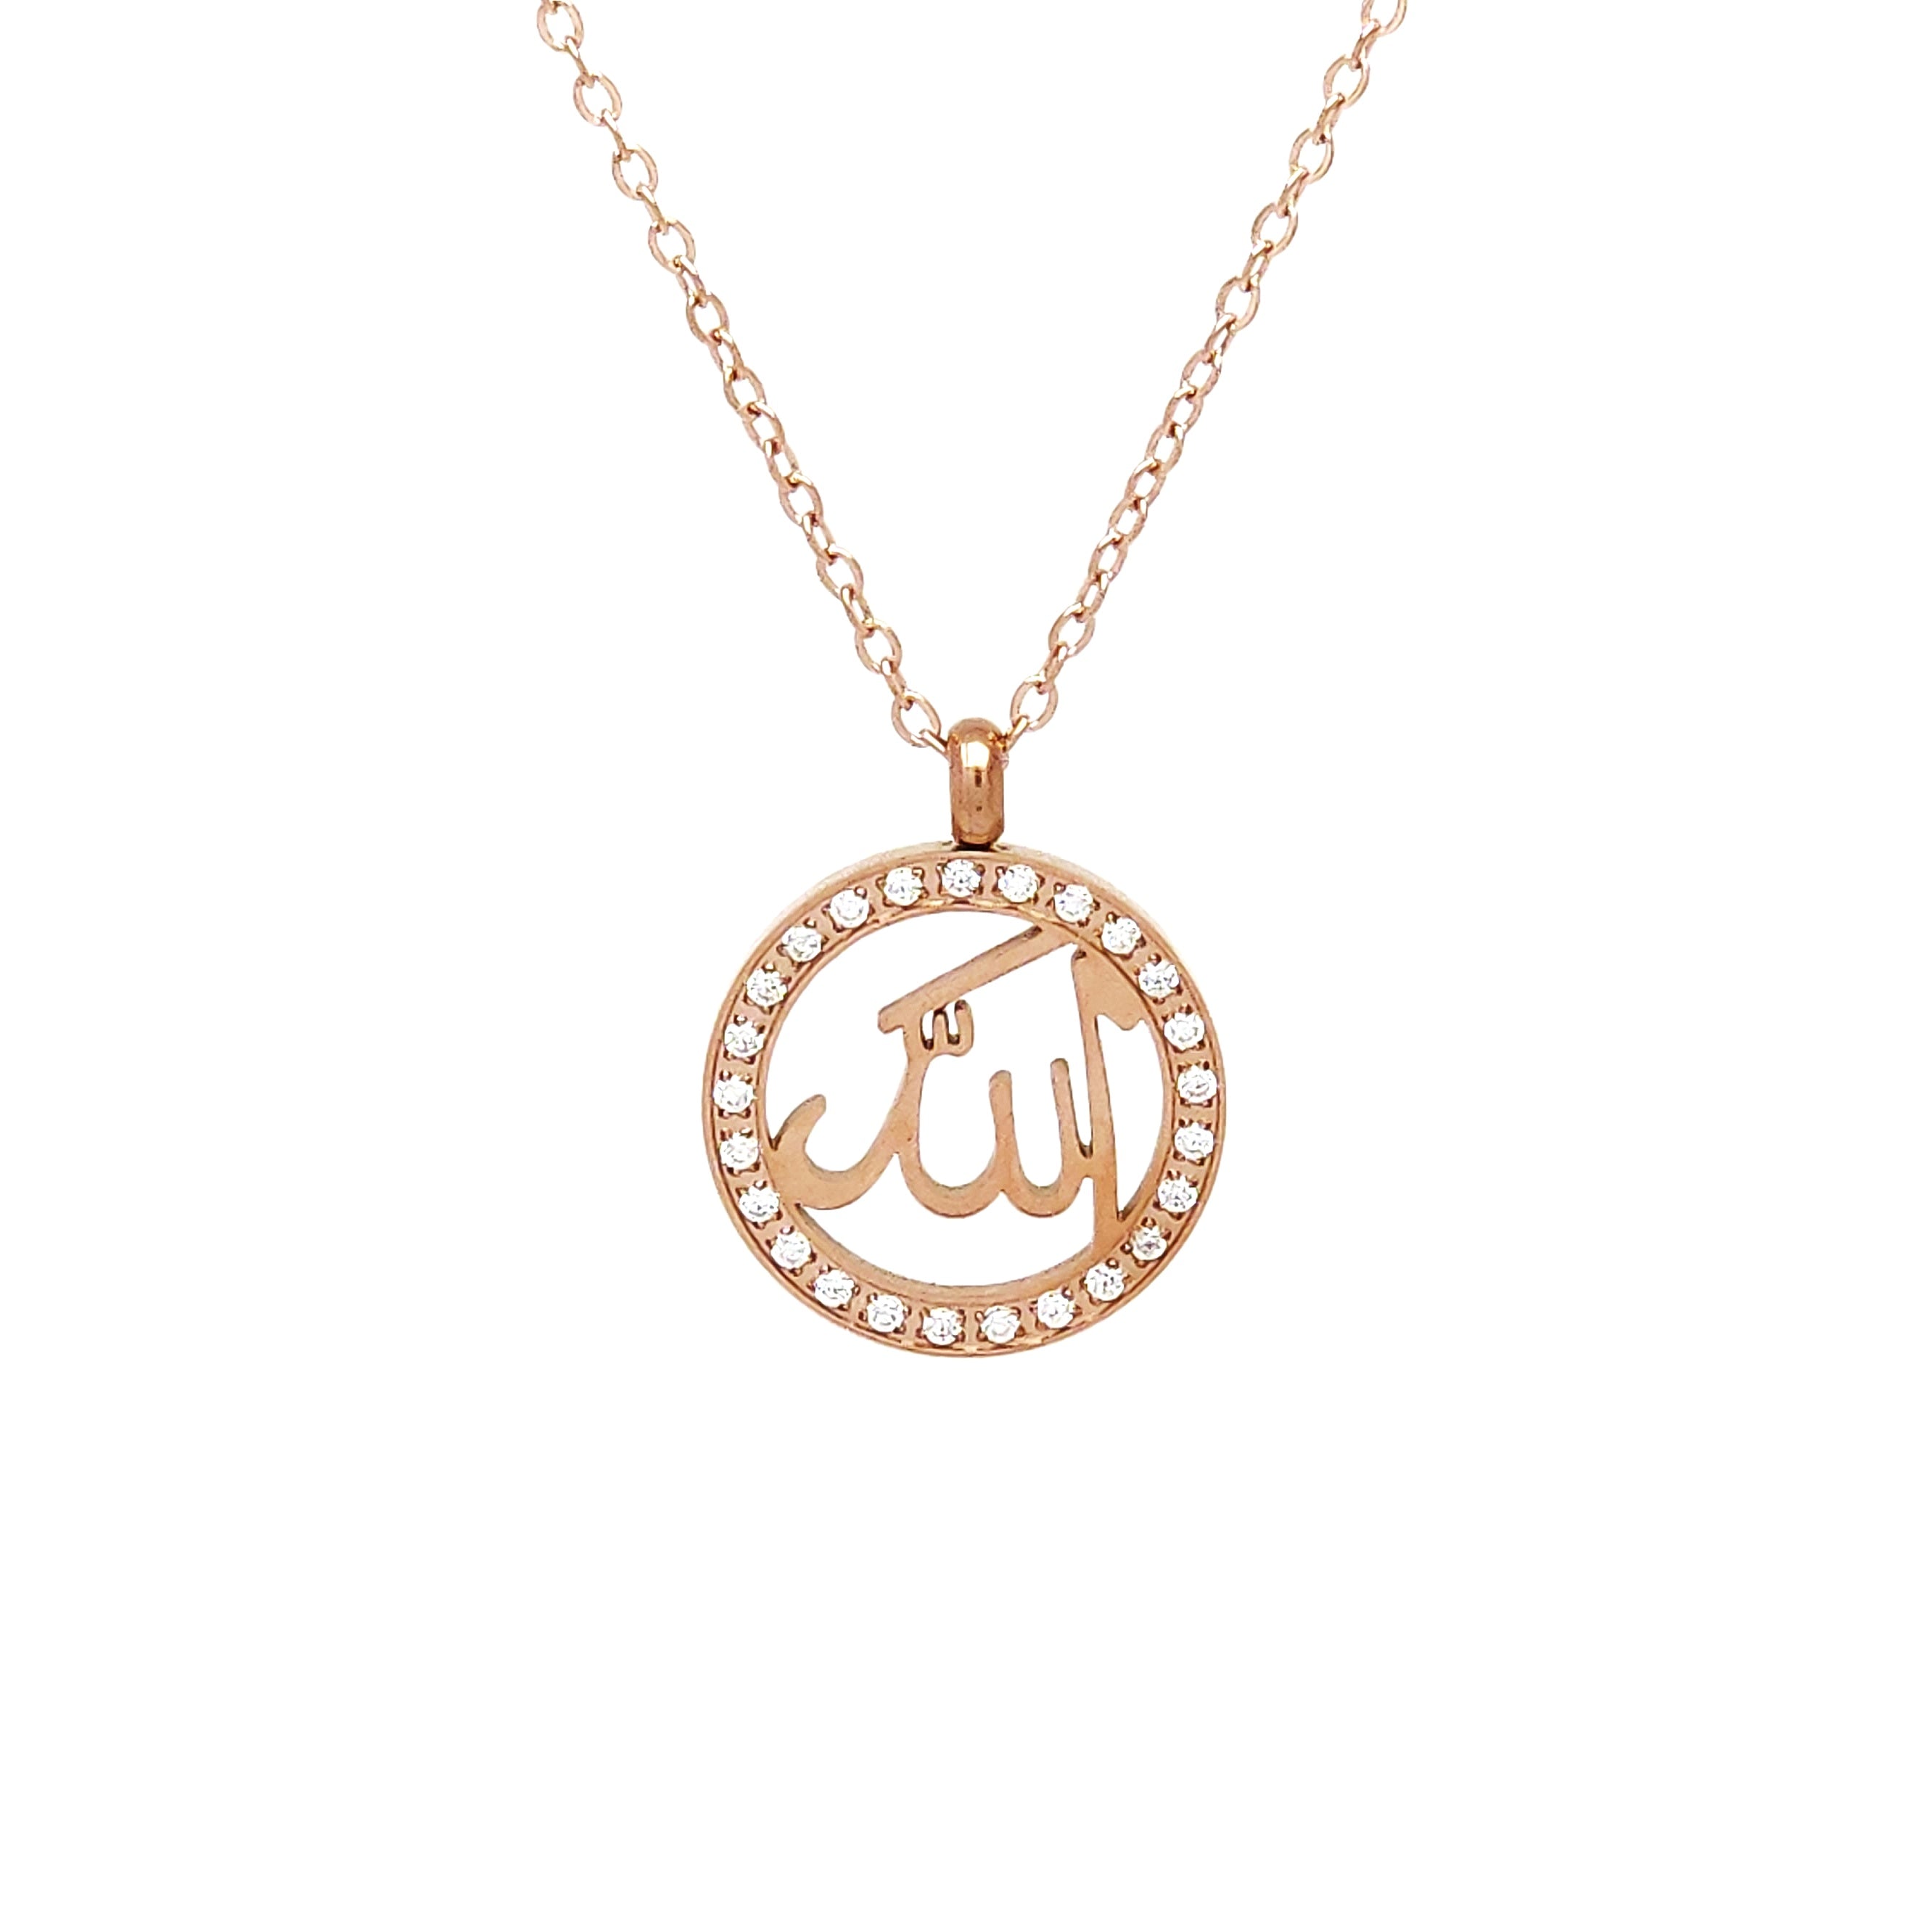 Allah (الله) Necklace